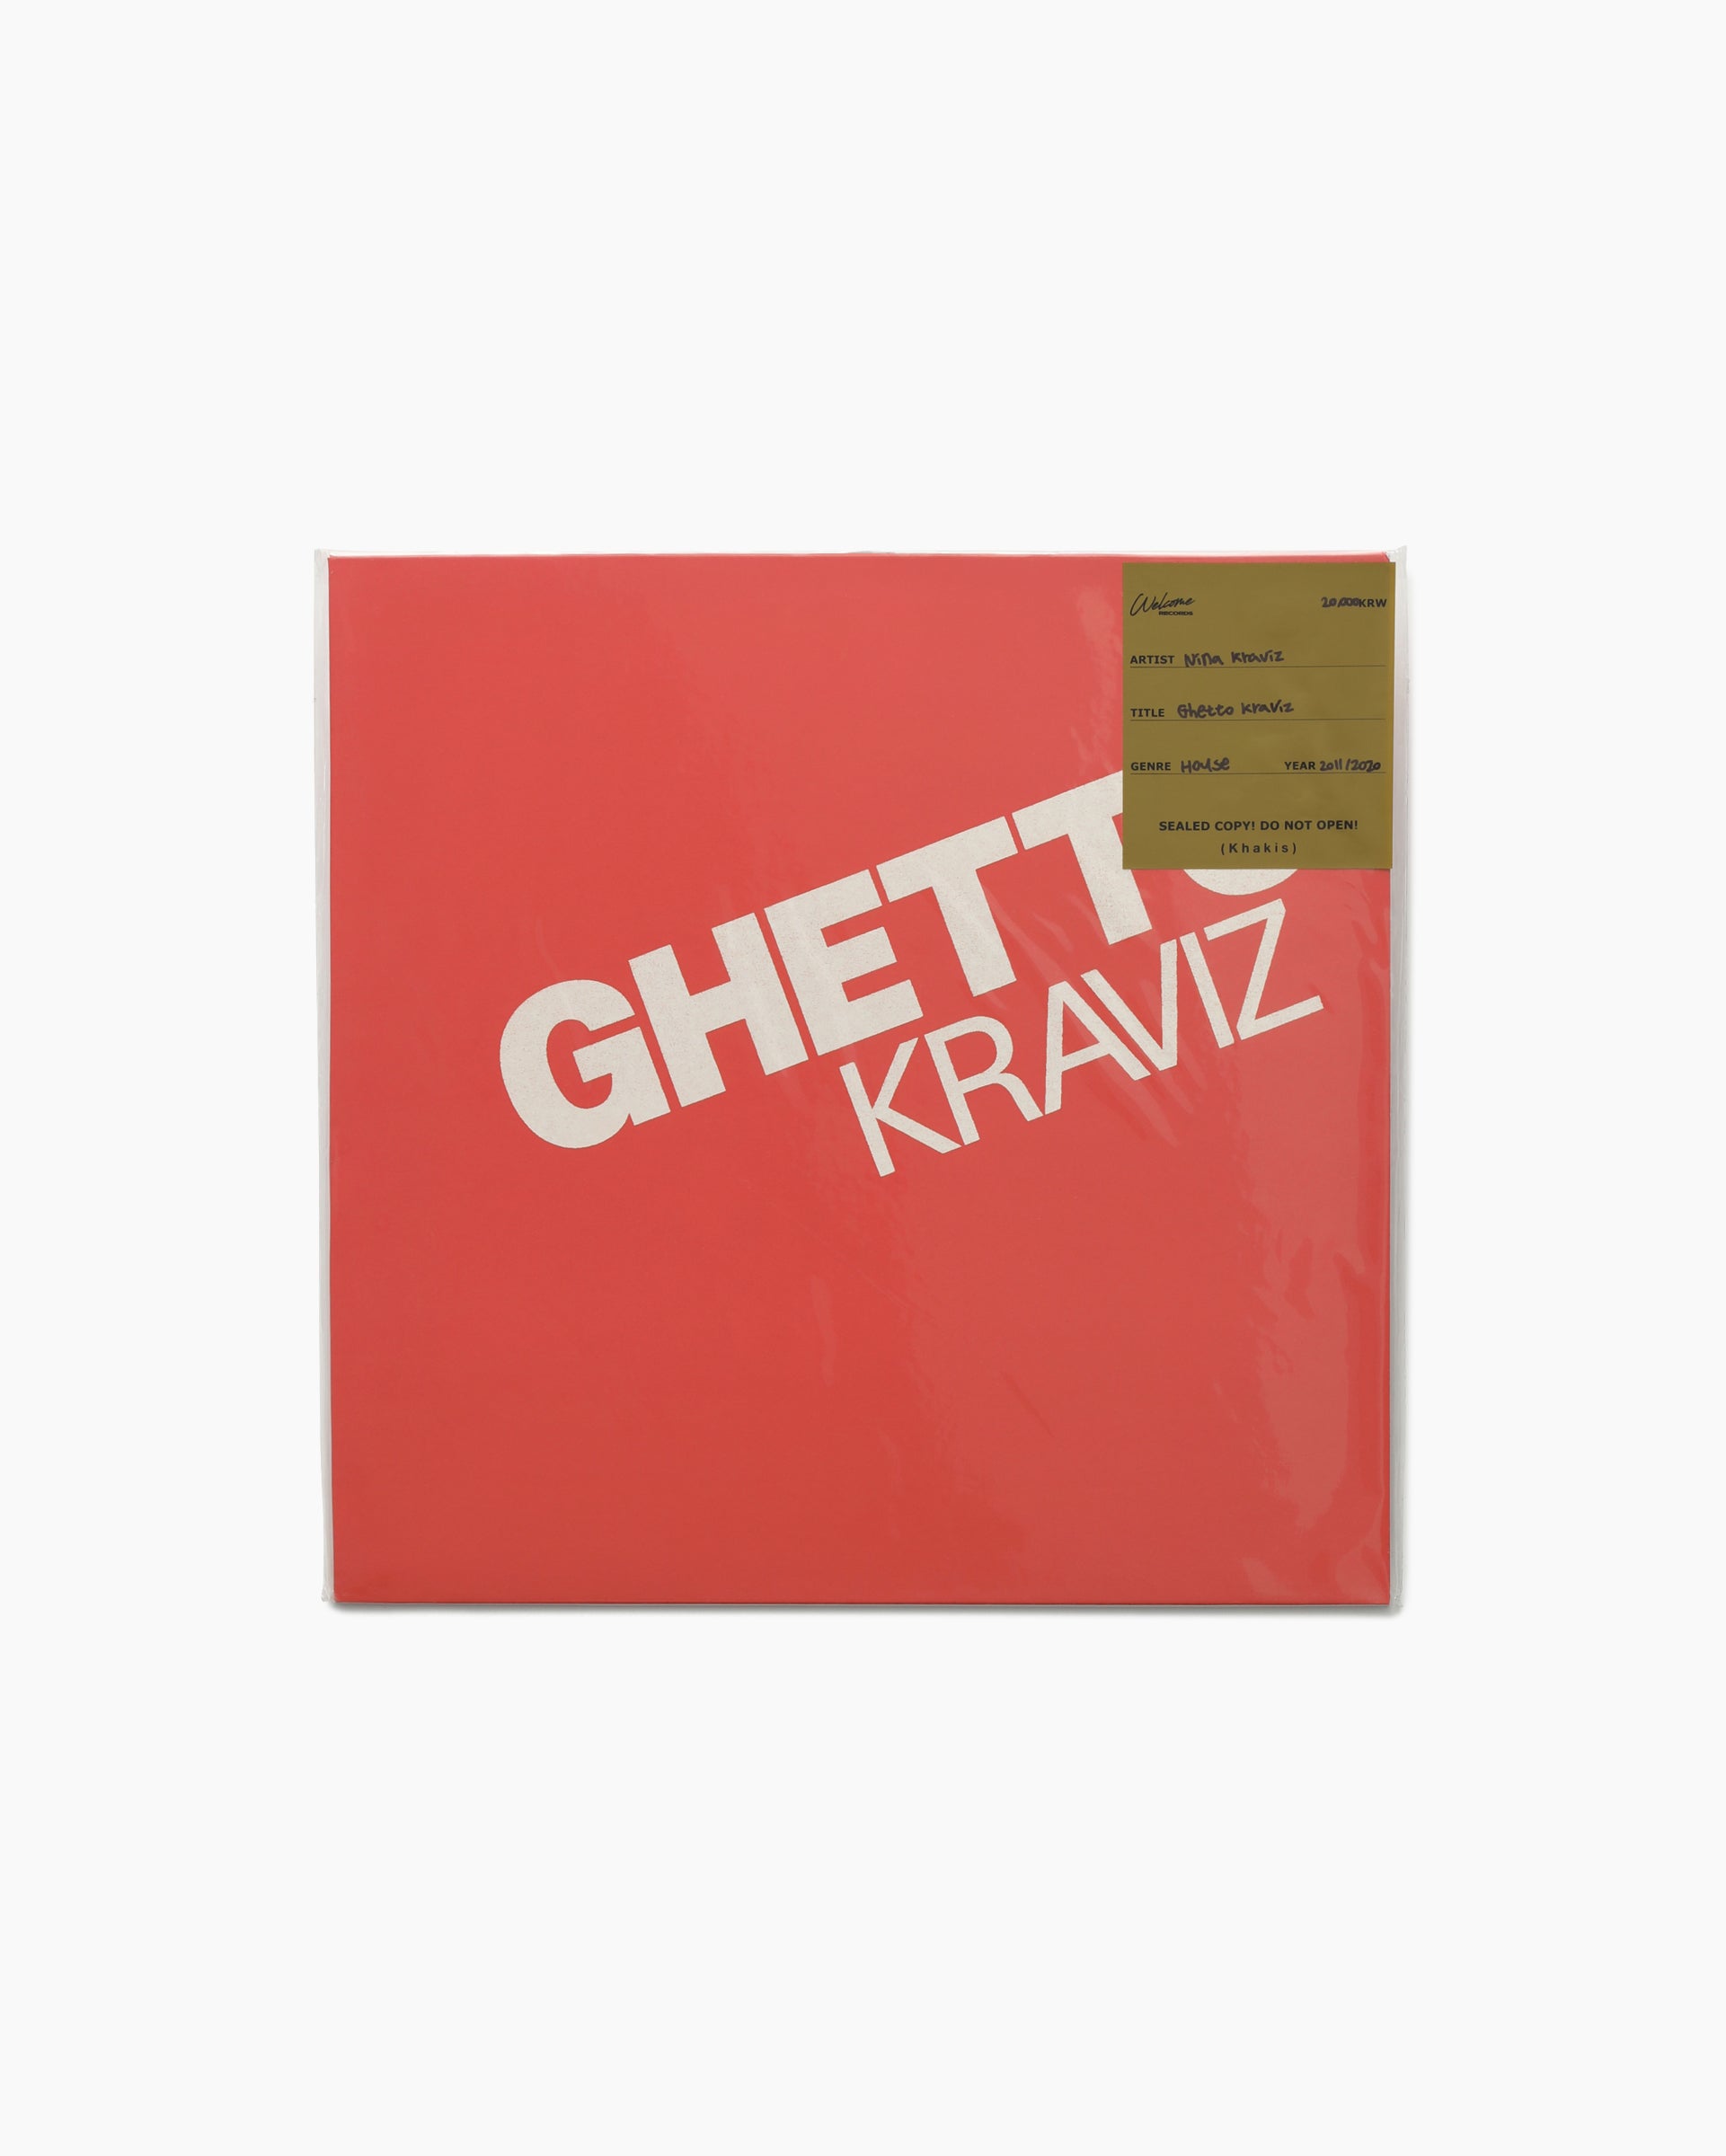 Nina Kraviz - Ghetto Kraviz